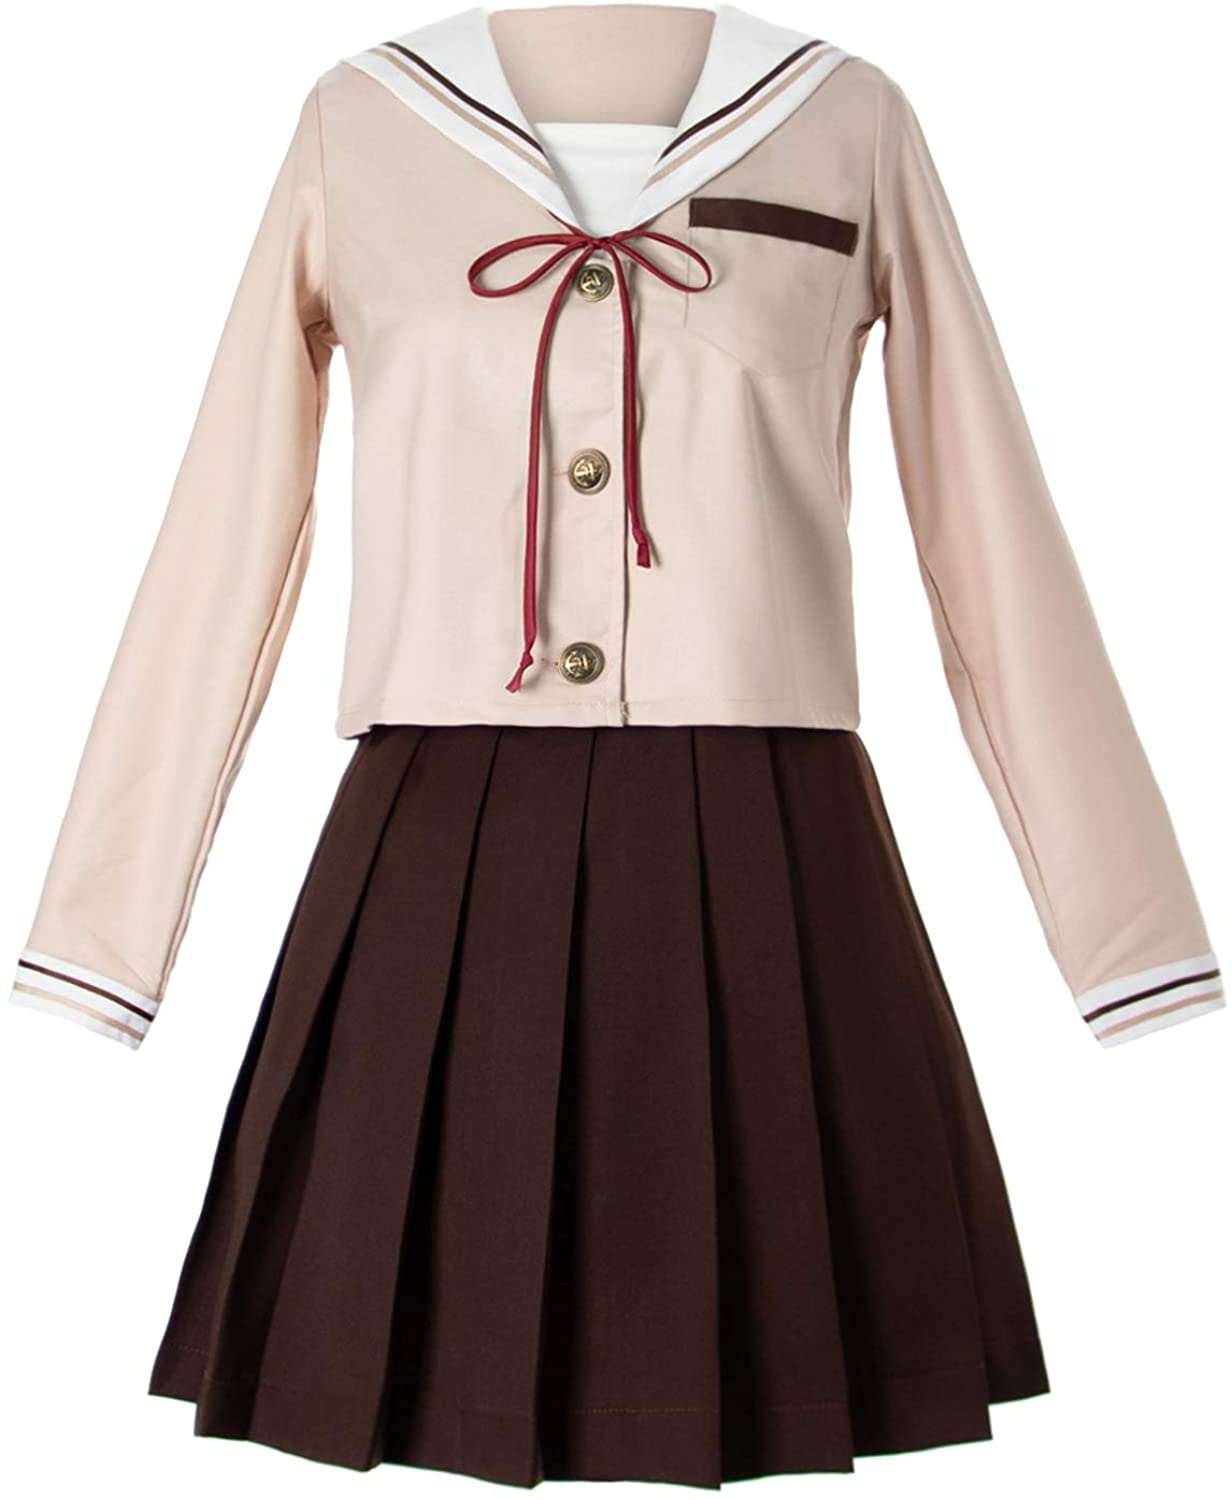 JK Uniform Brown Pleated Skirt 2